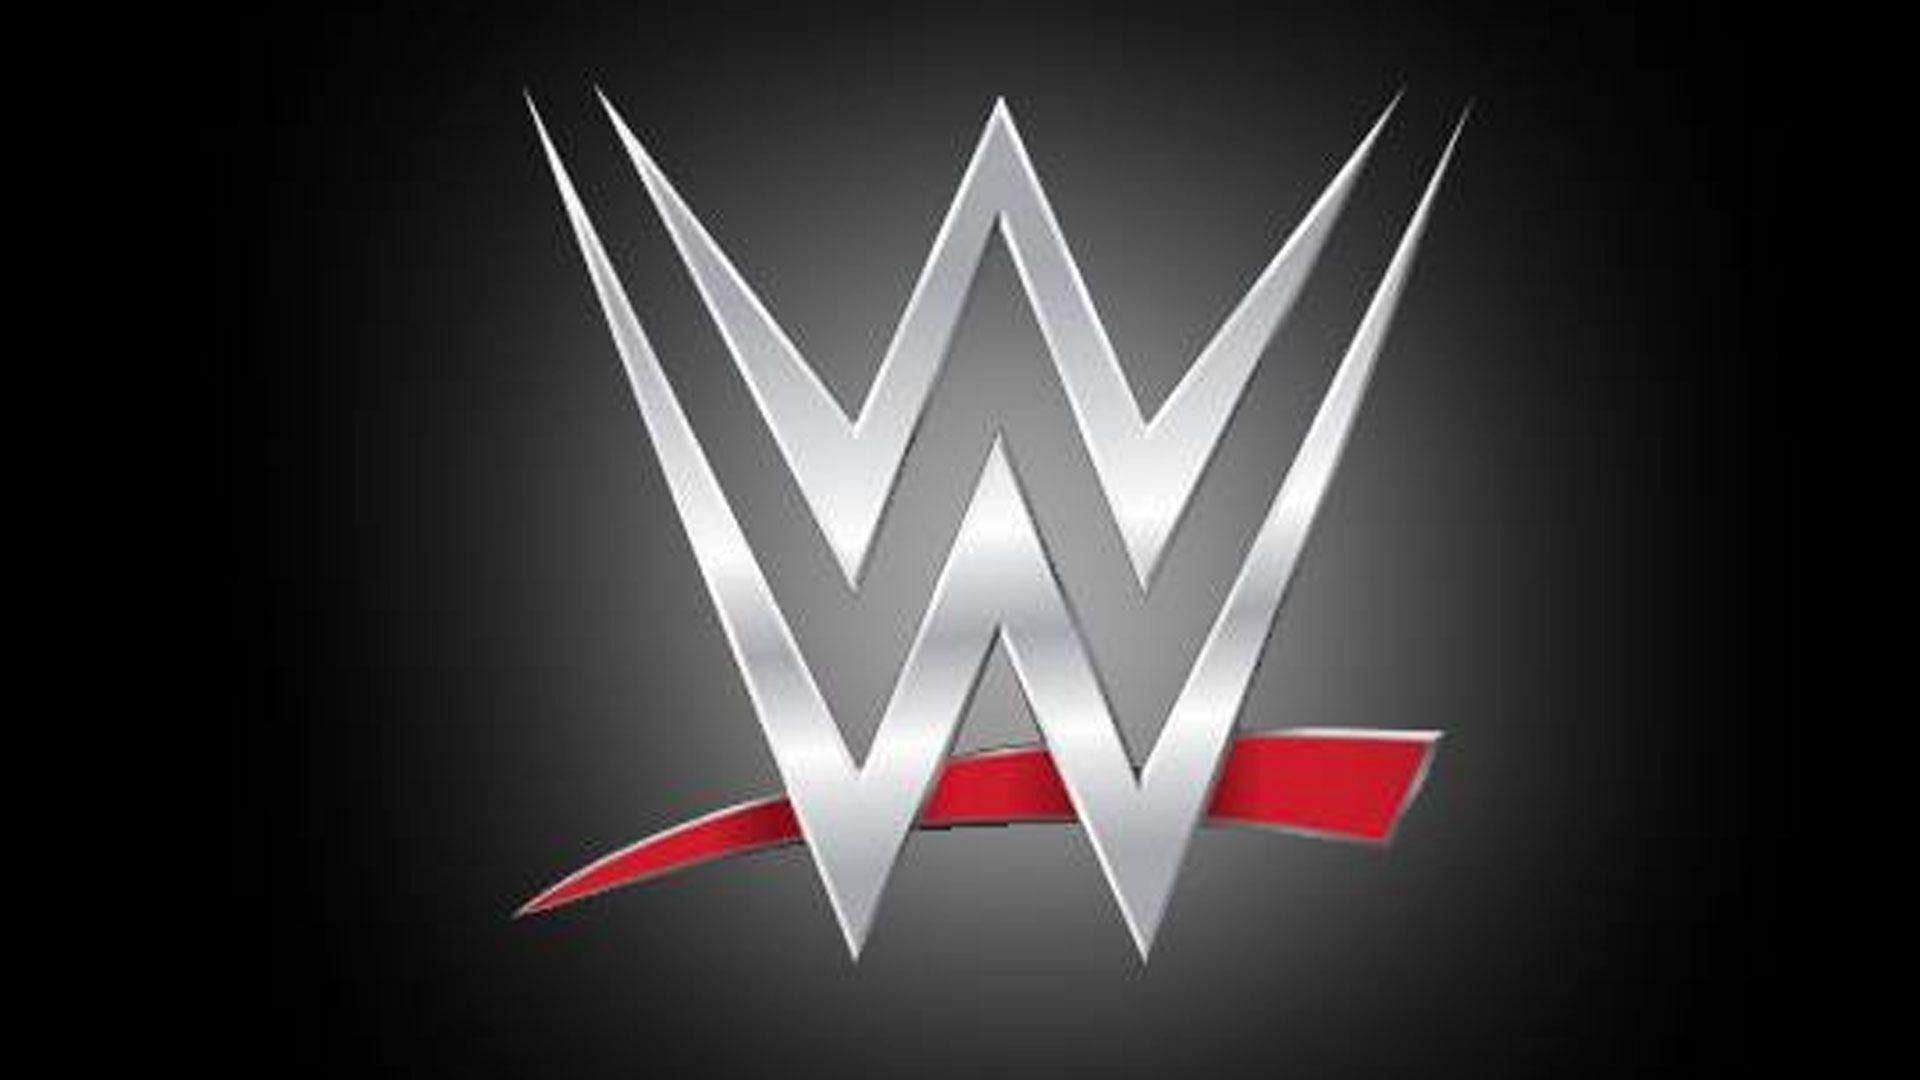 WWE Championship is most prestigious title in Pro wrestling world